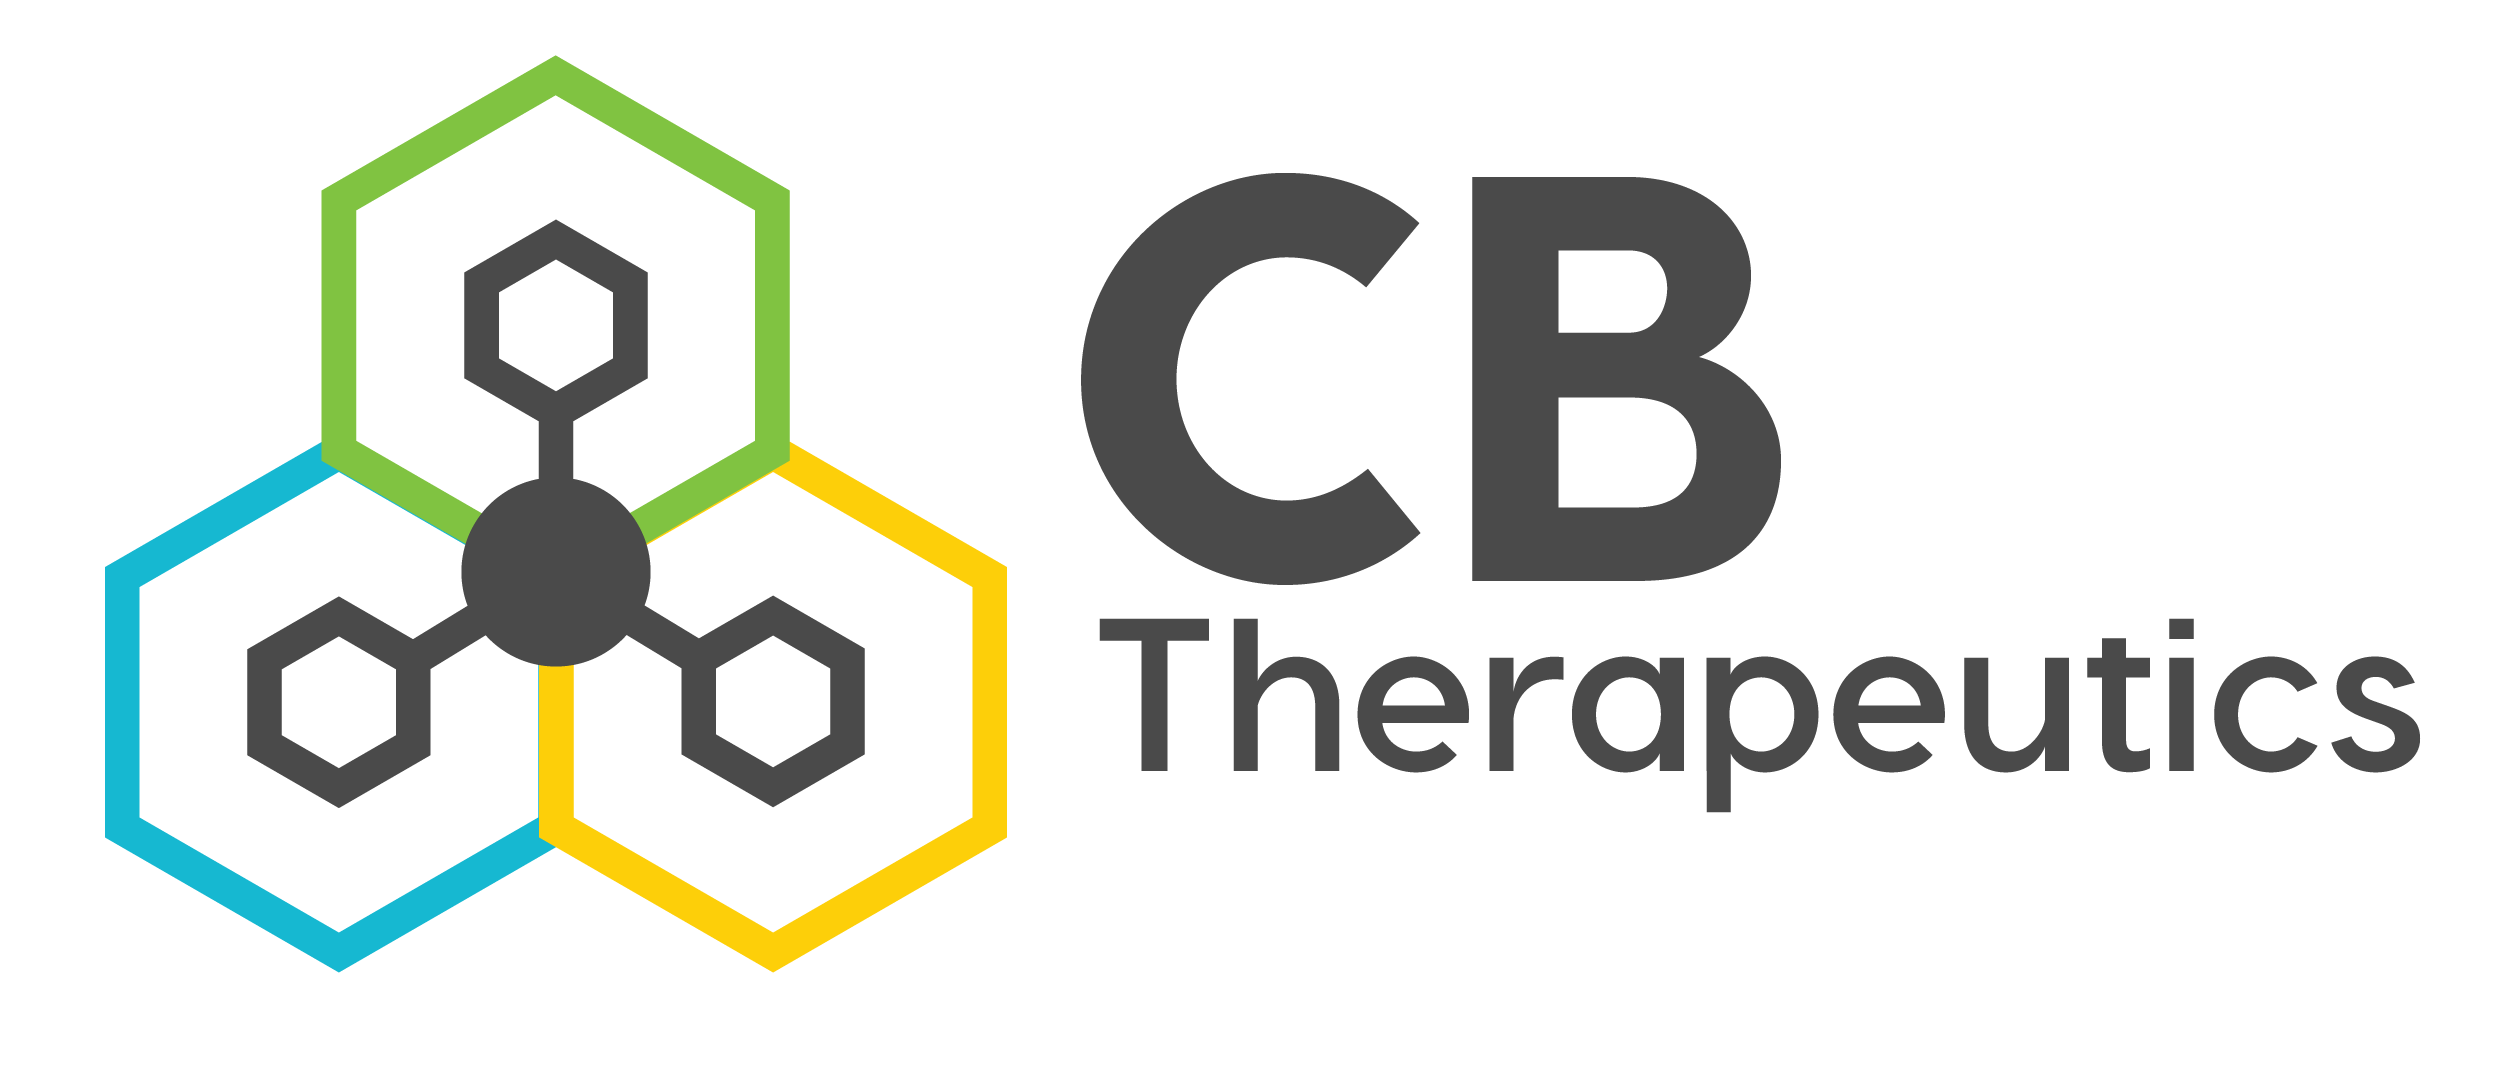 CBThera-Logo-for-White-BG-no-box-2500px.png